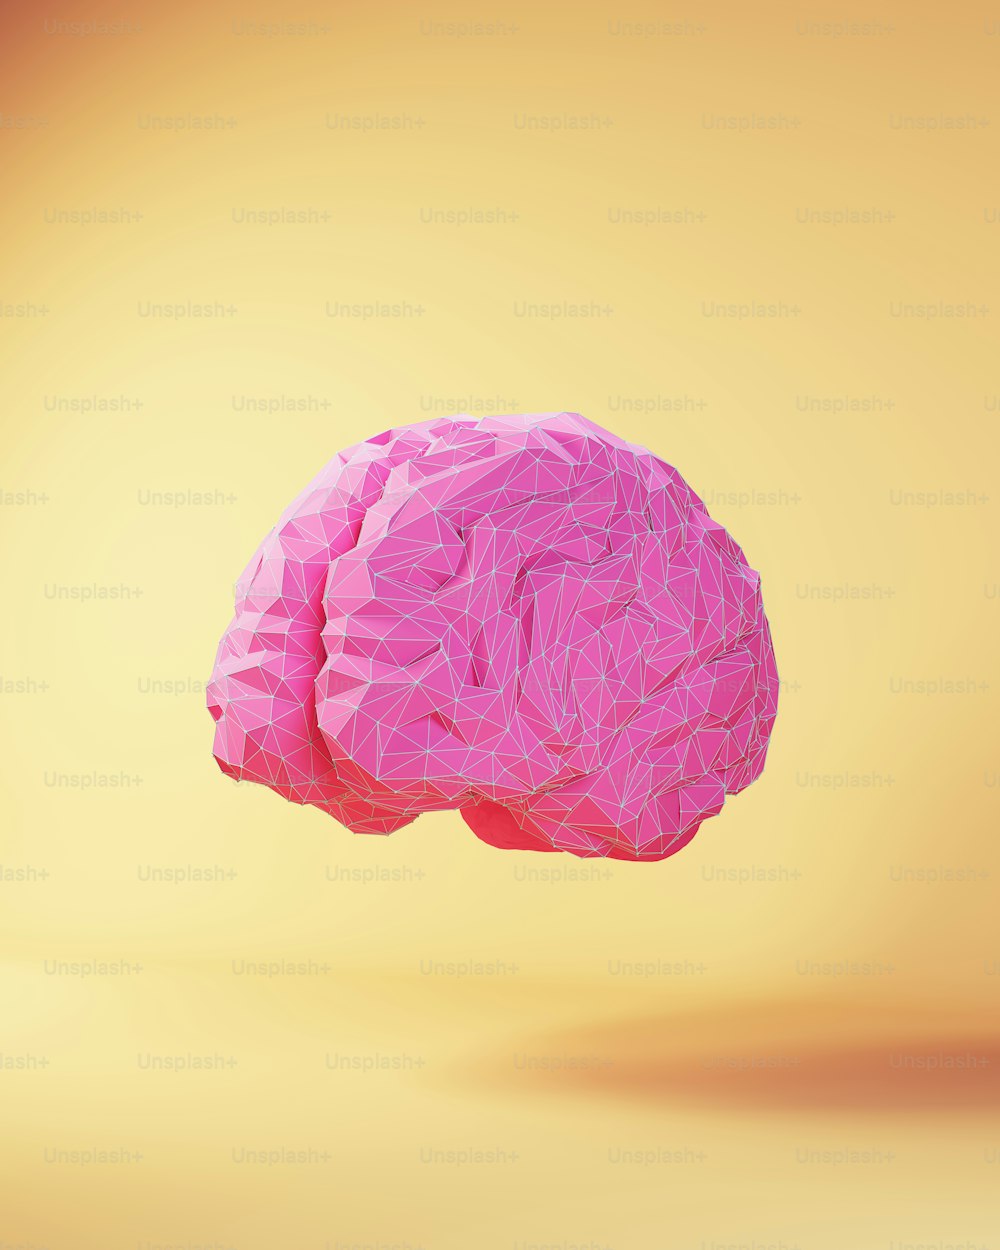 Pink Artificial Intelligence Brain Concept Research Innovation Neural Networks AI Ethics Data Cyborg Robotics 3d illustration render